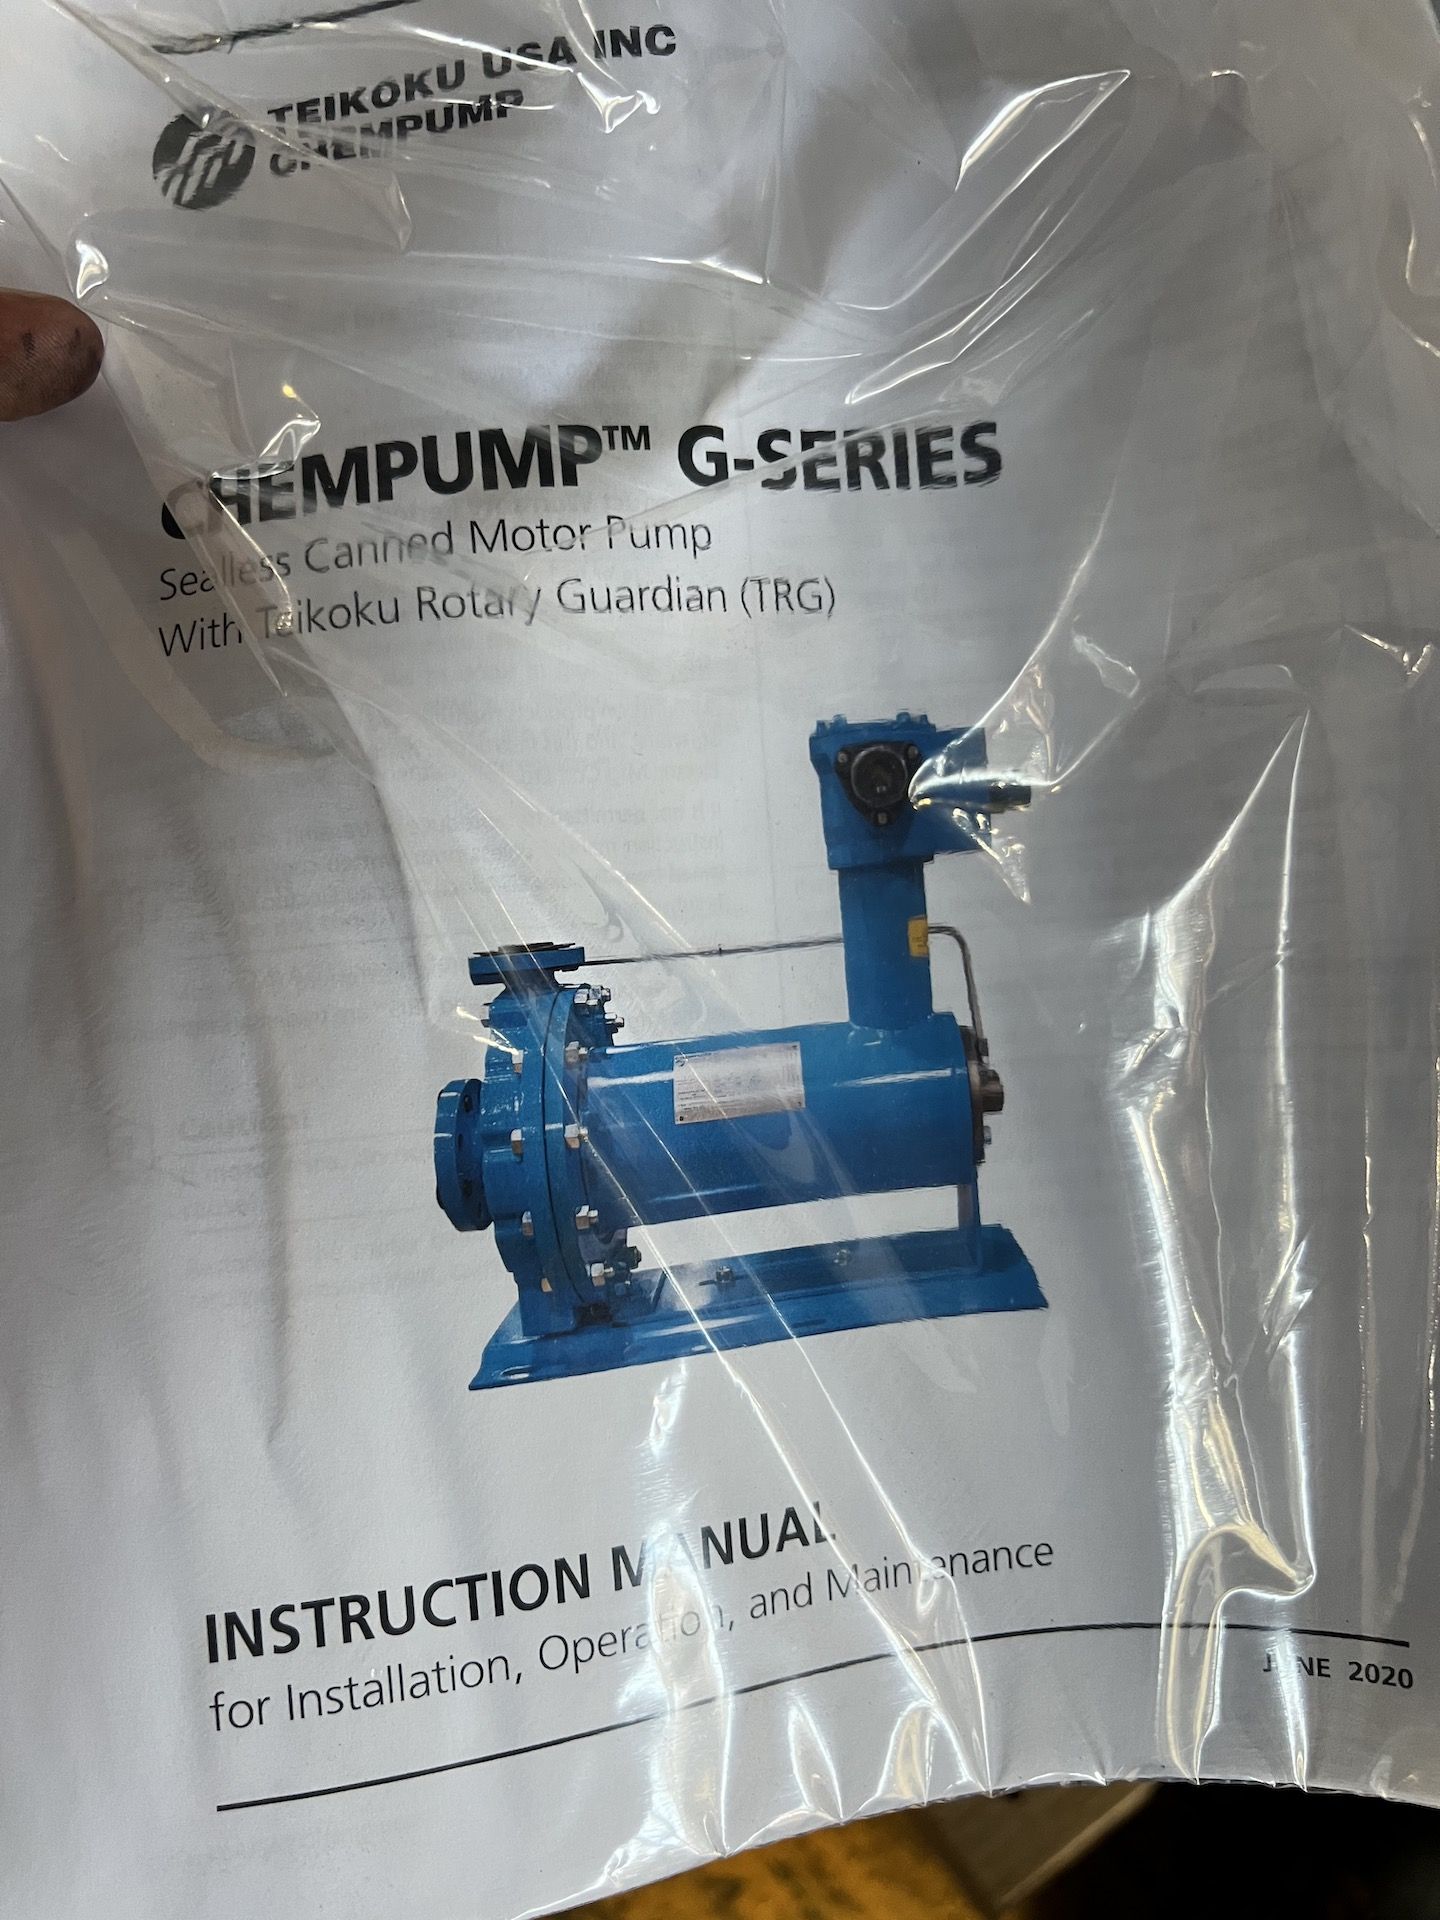 NEW CHEMPUMP G-SERIES AMMONIA PUMP, MODEL GVE-7.5K-3S, 12.2 HP, 460 V (SIMPLE LOADING FEE $110) - Image 11 of 12